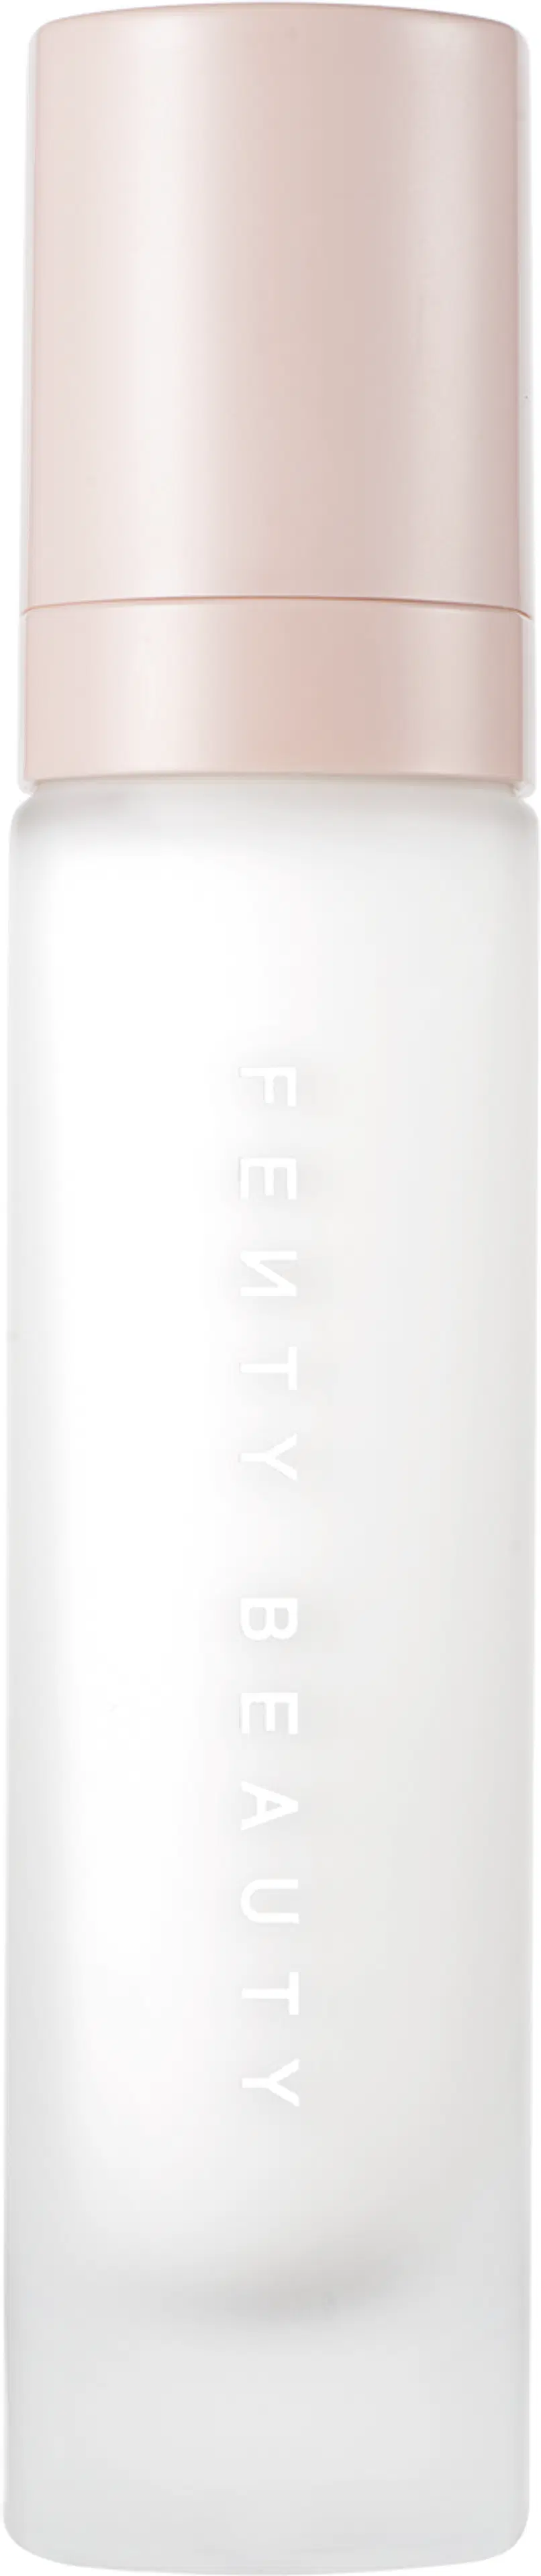 Fenty Beauty Pro Filt'r Mattifying Primer meikinpohjustaja 32 ml